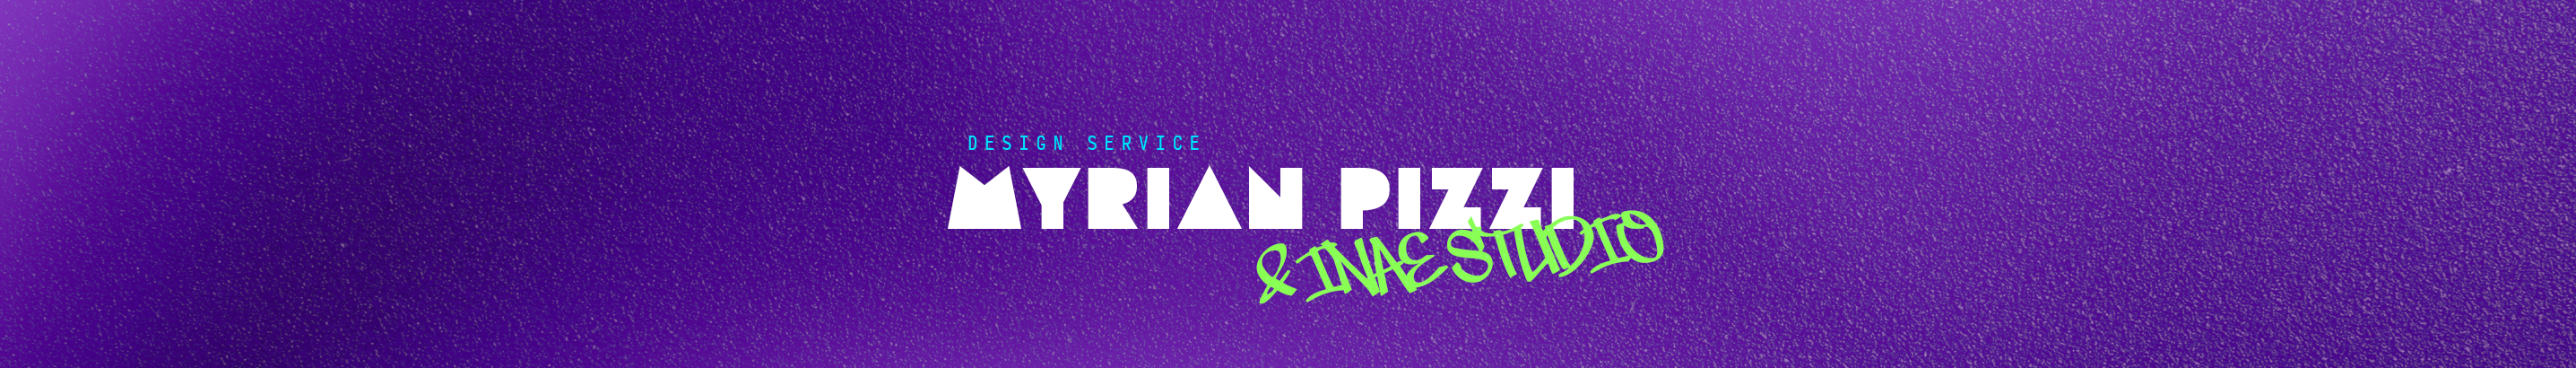 Myrian Pizzi's profile banner